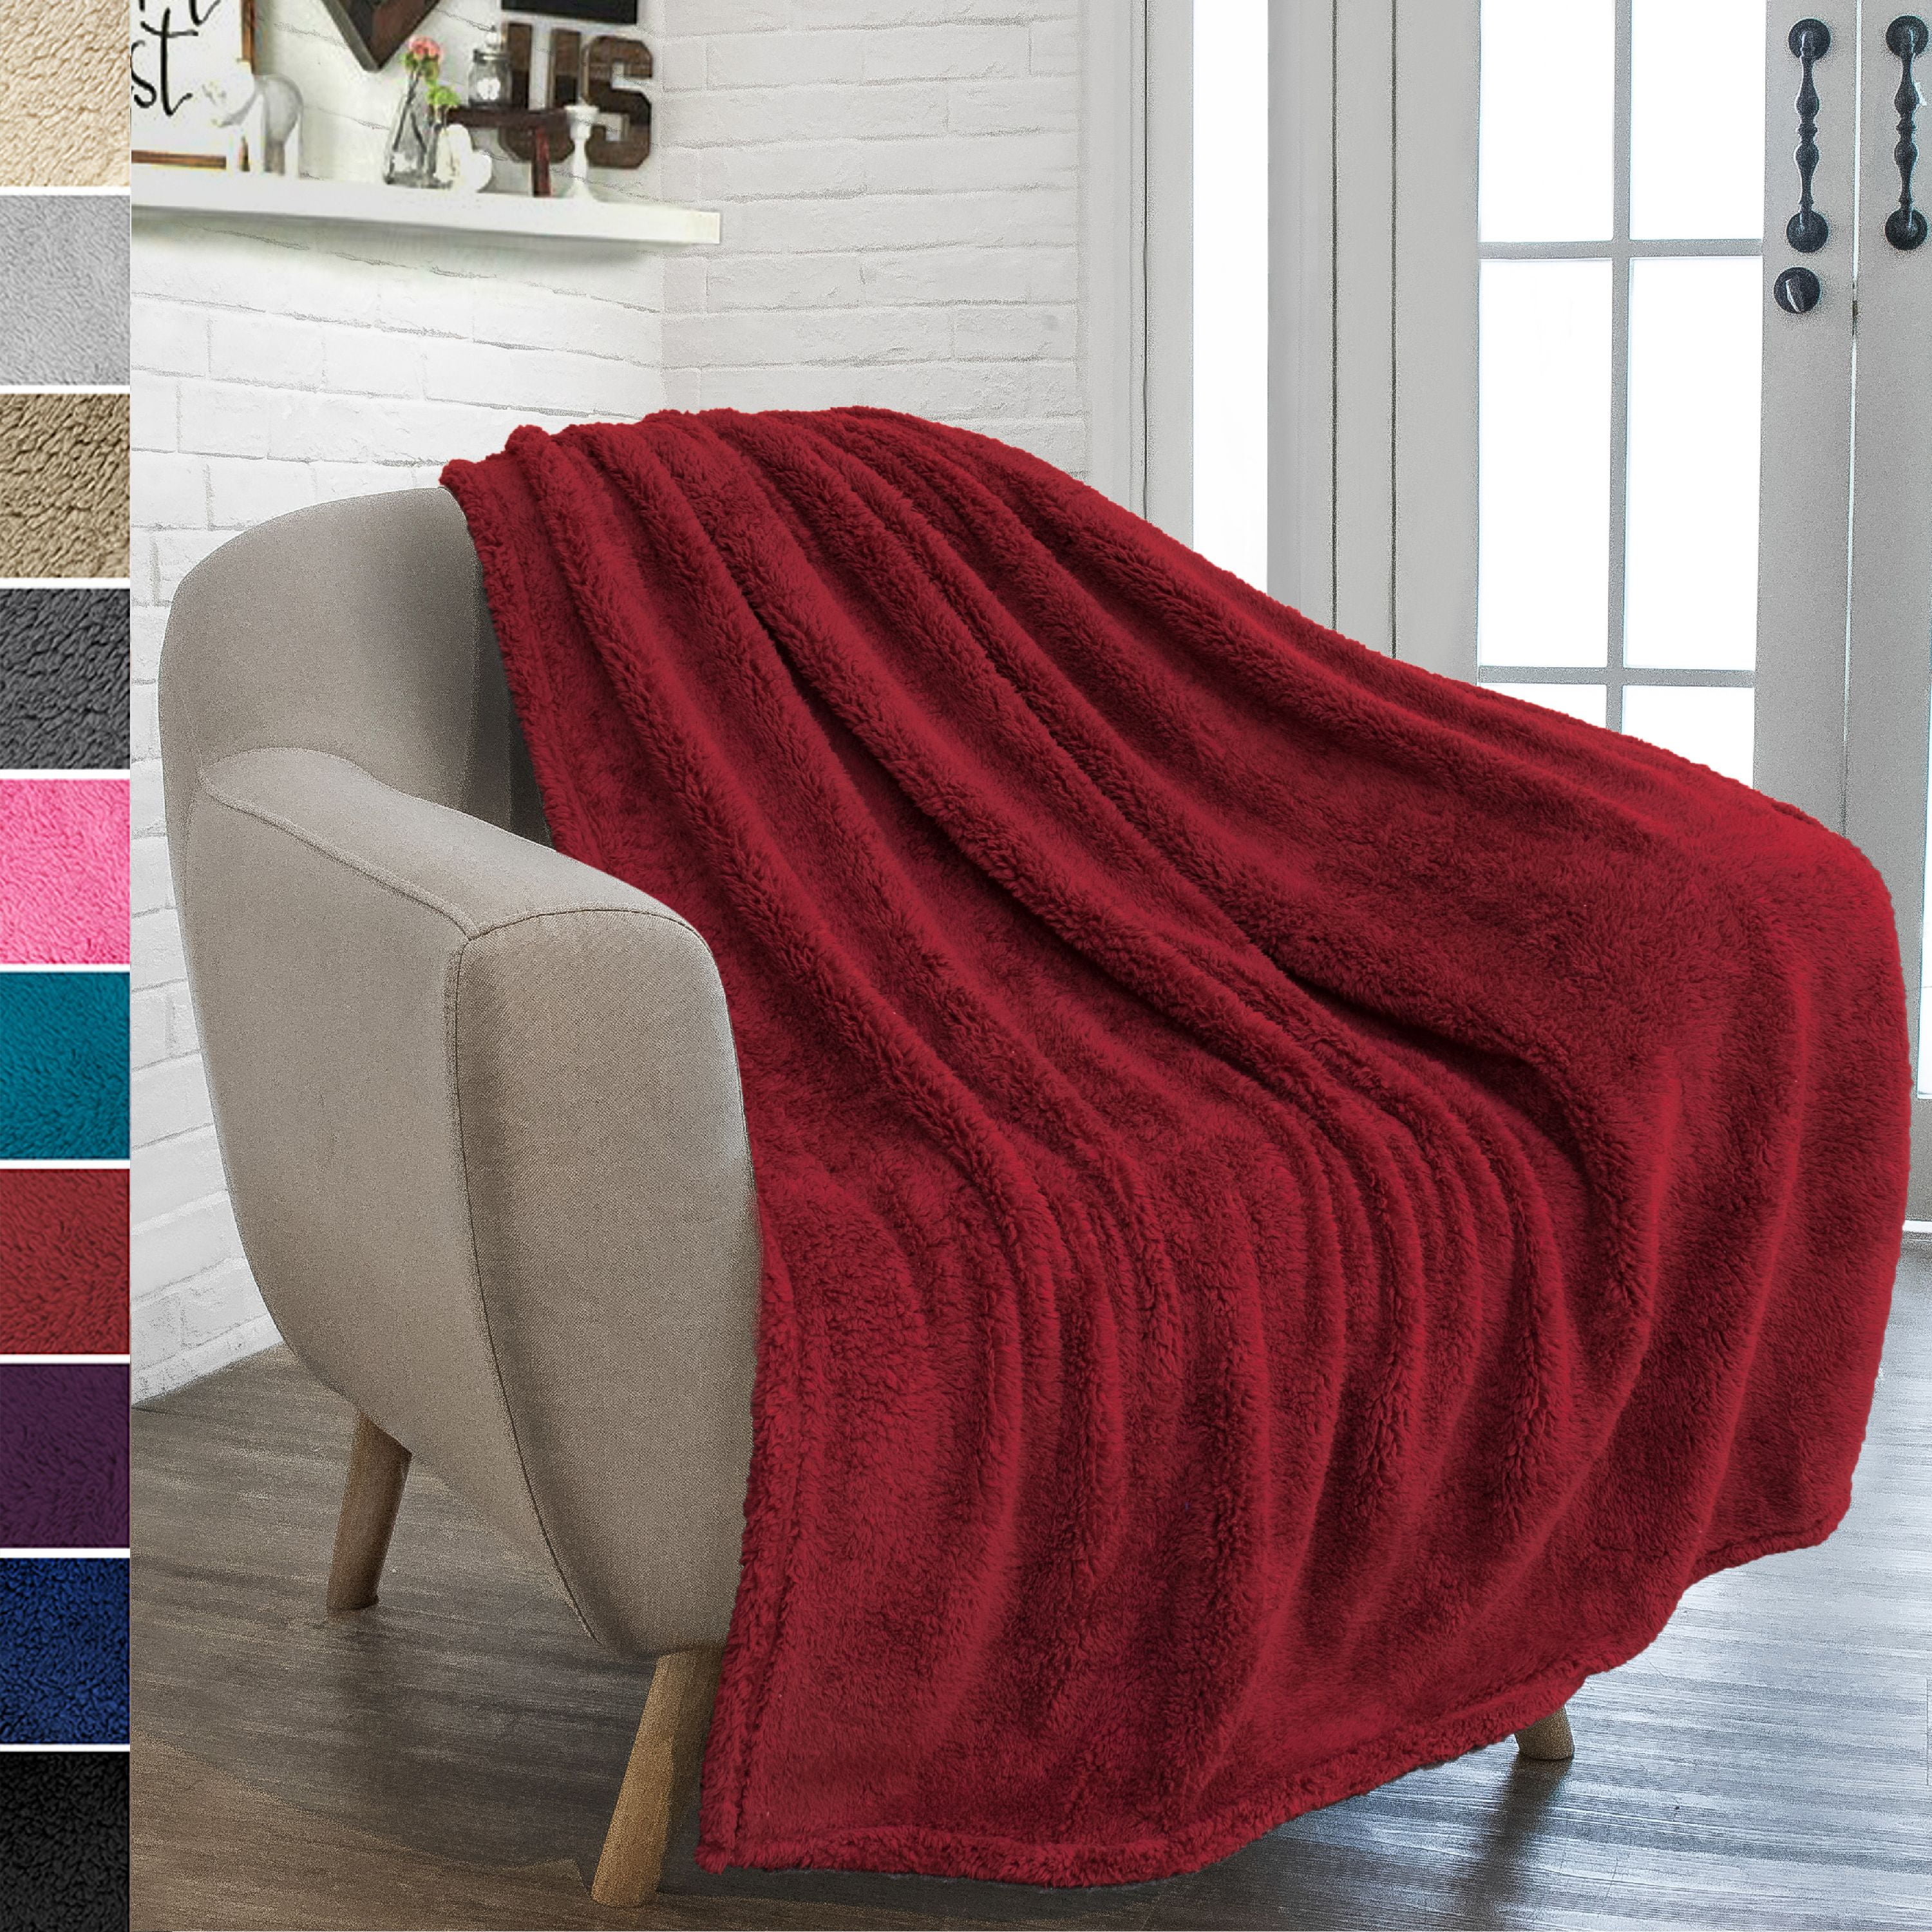 Camo Sherpa Fleece Blanket Soft Throw Microfiber Blanket for Couch Sofa Kids Women Adults Gift 